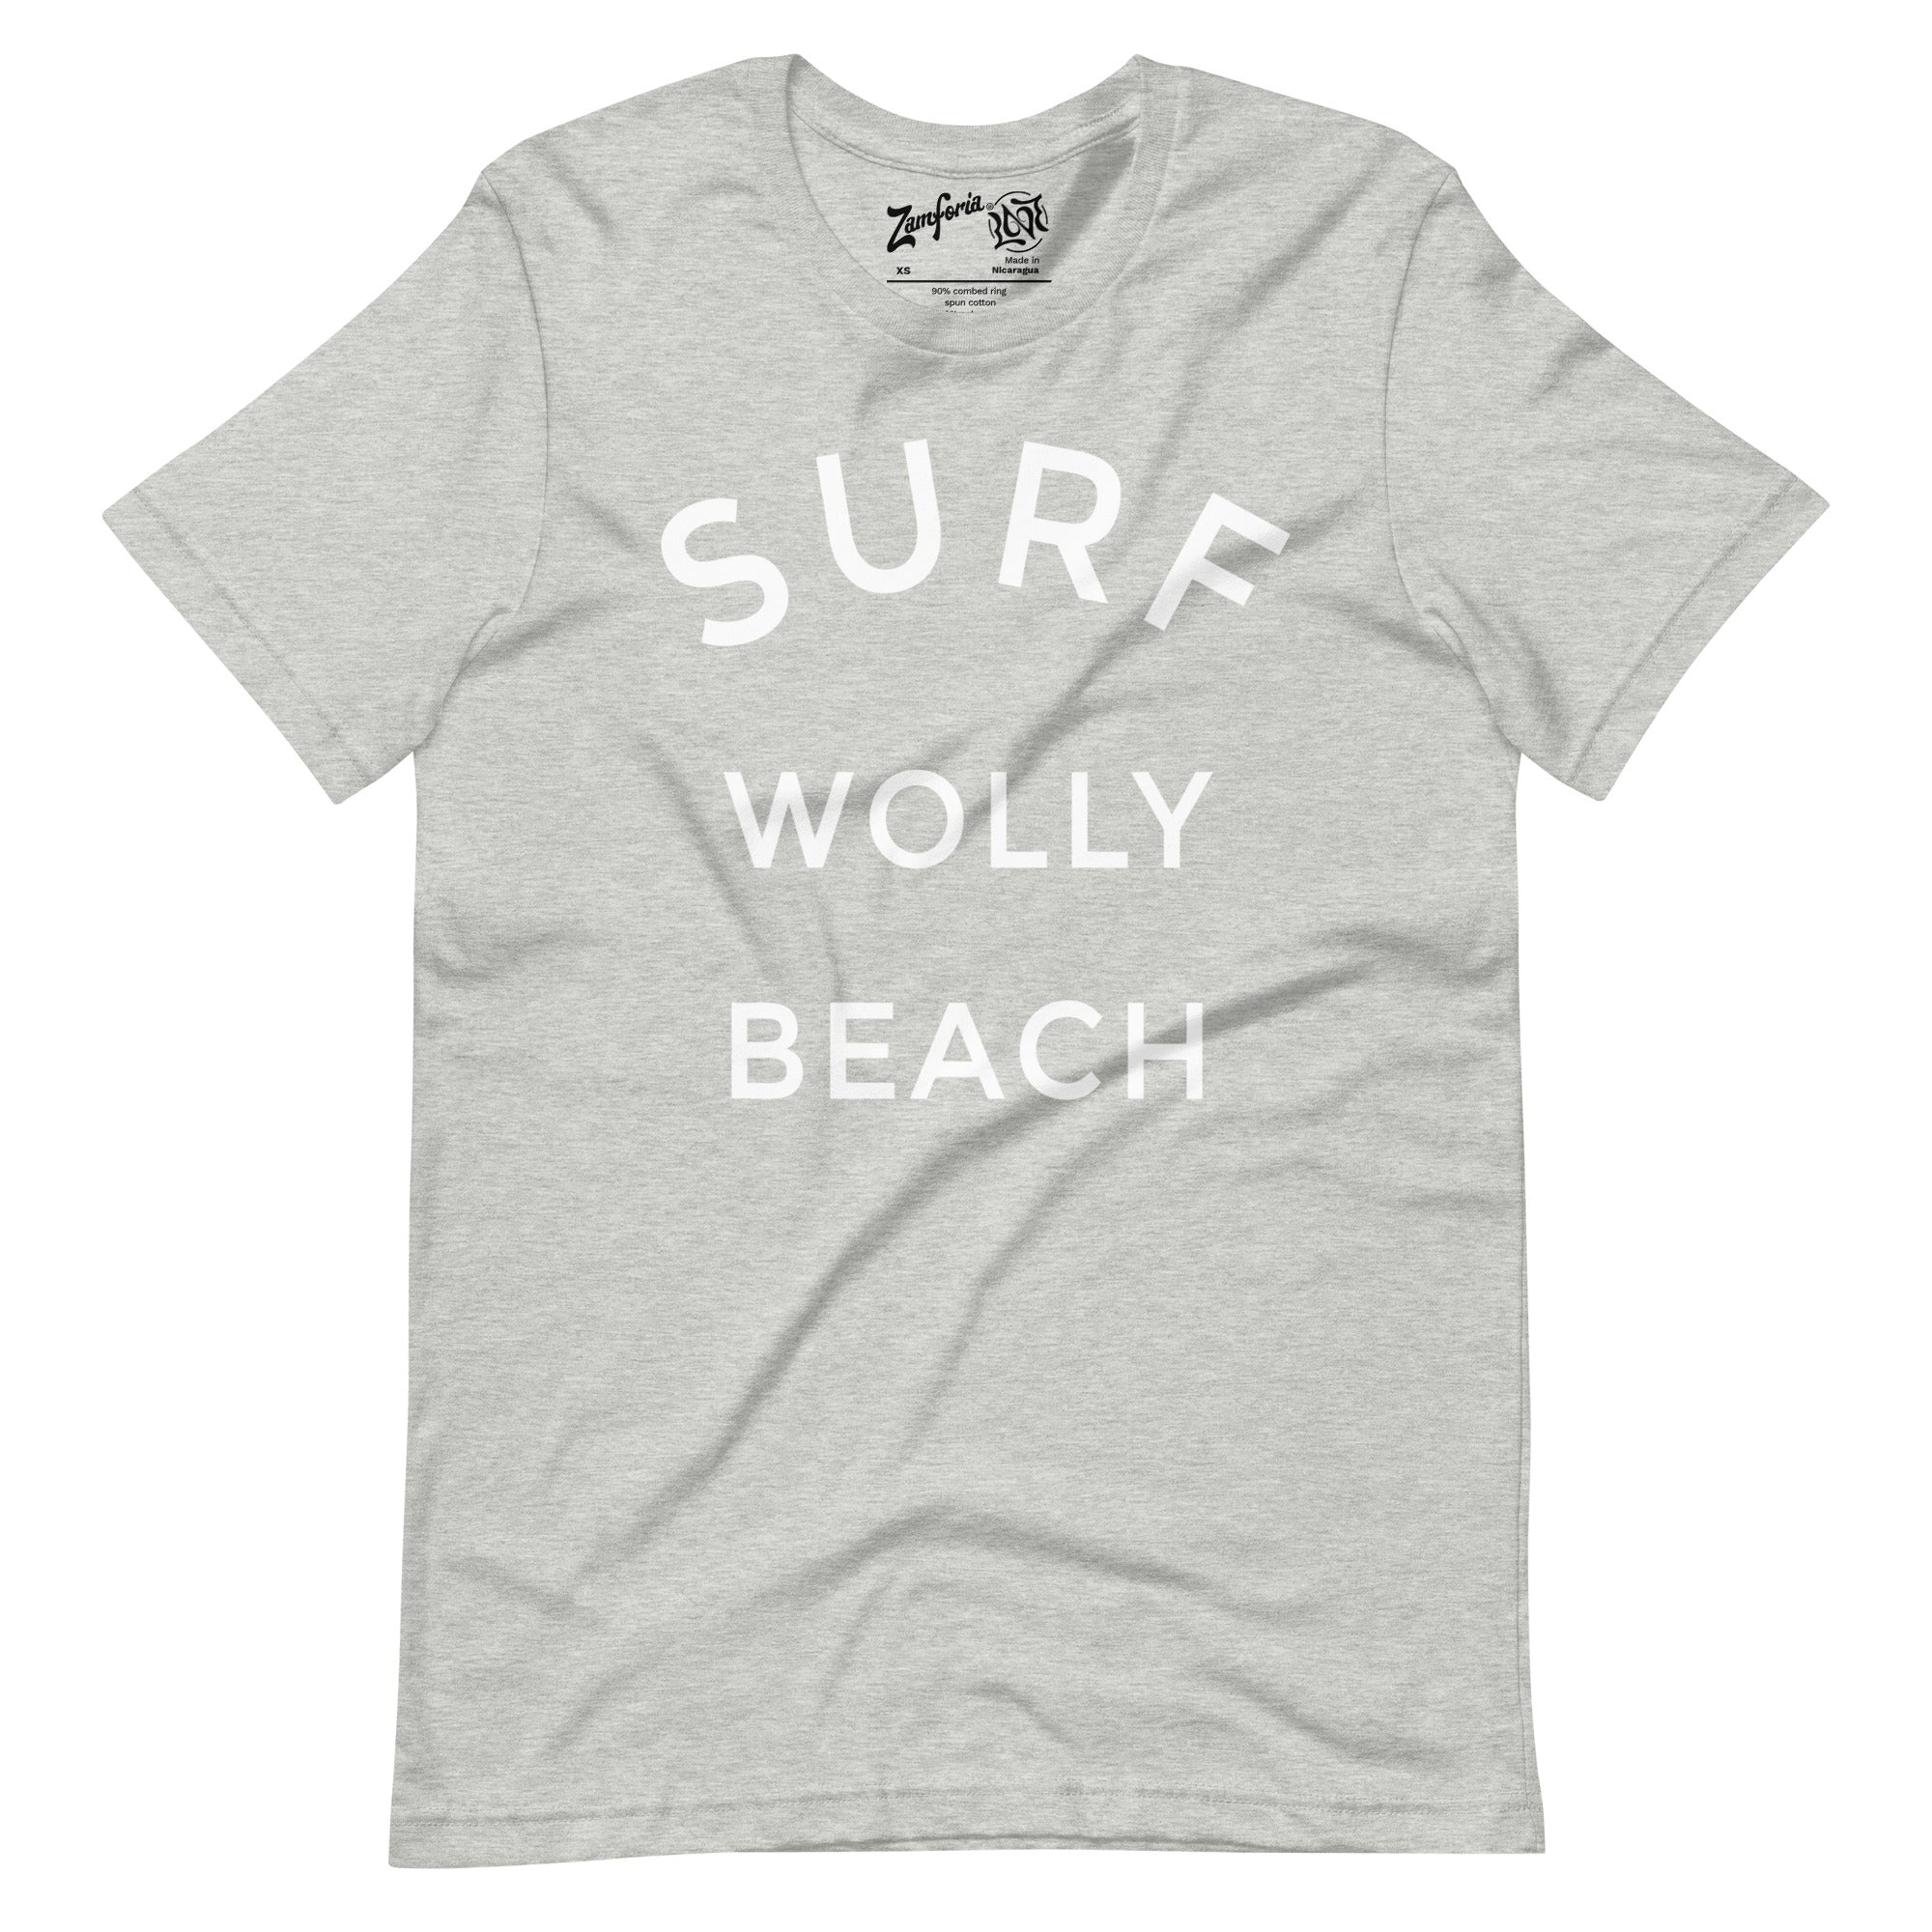 Surf Wolly Beach